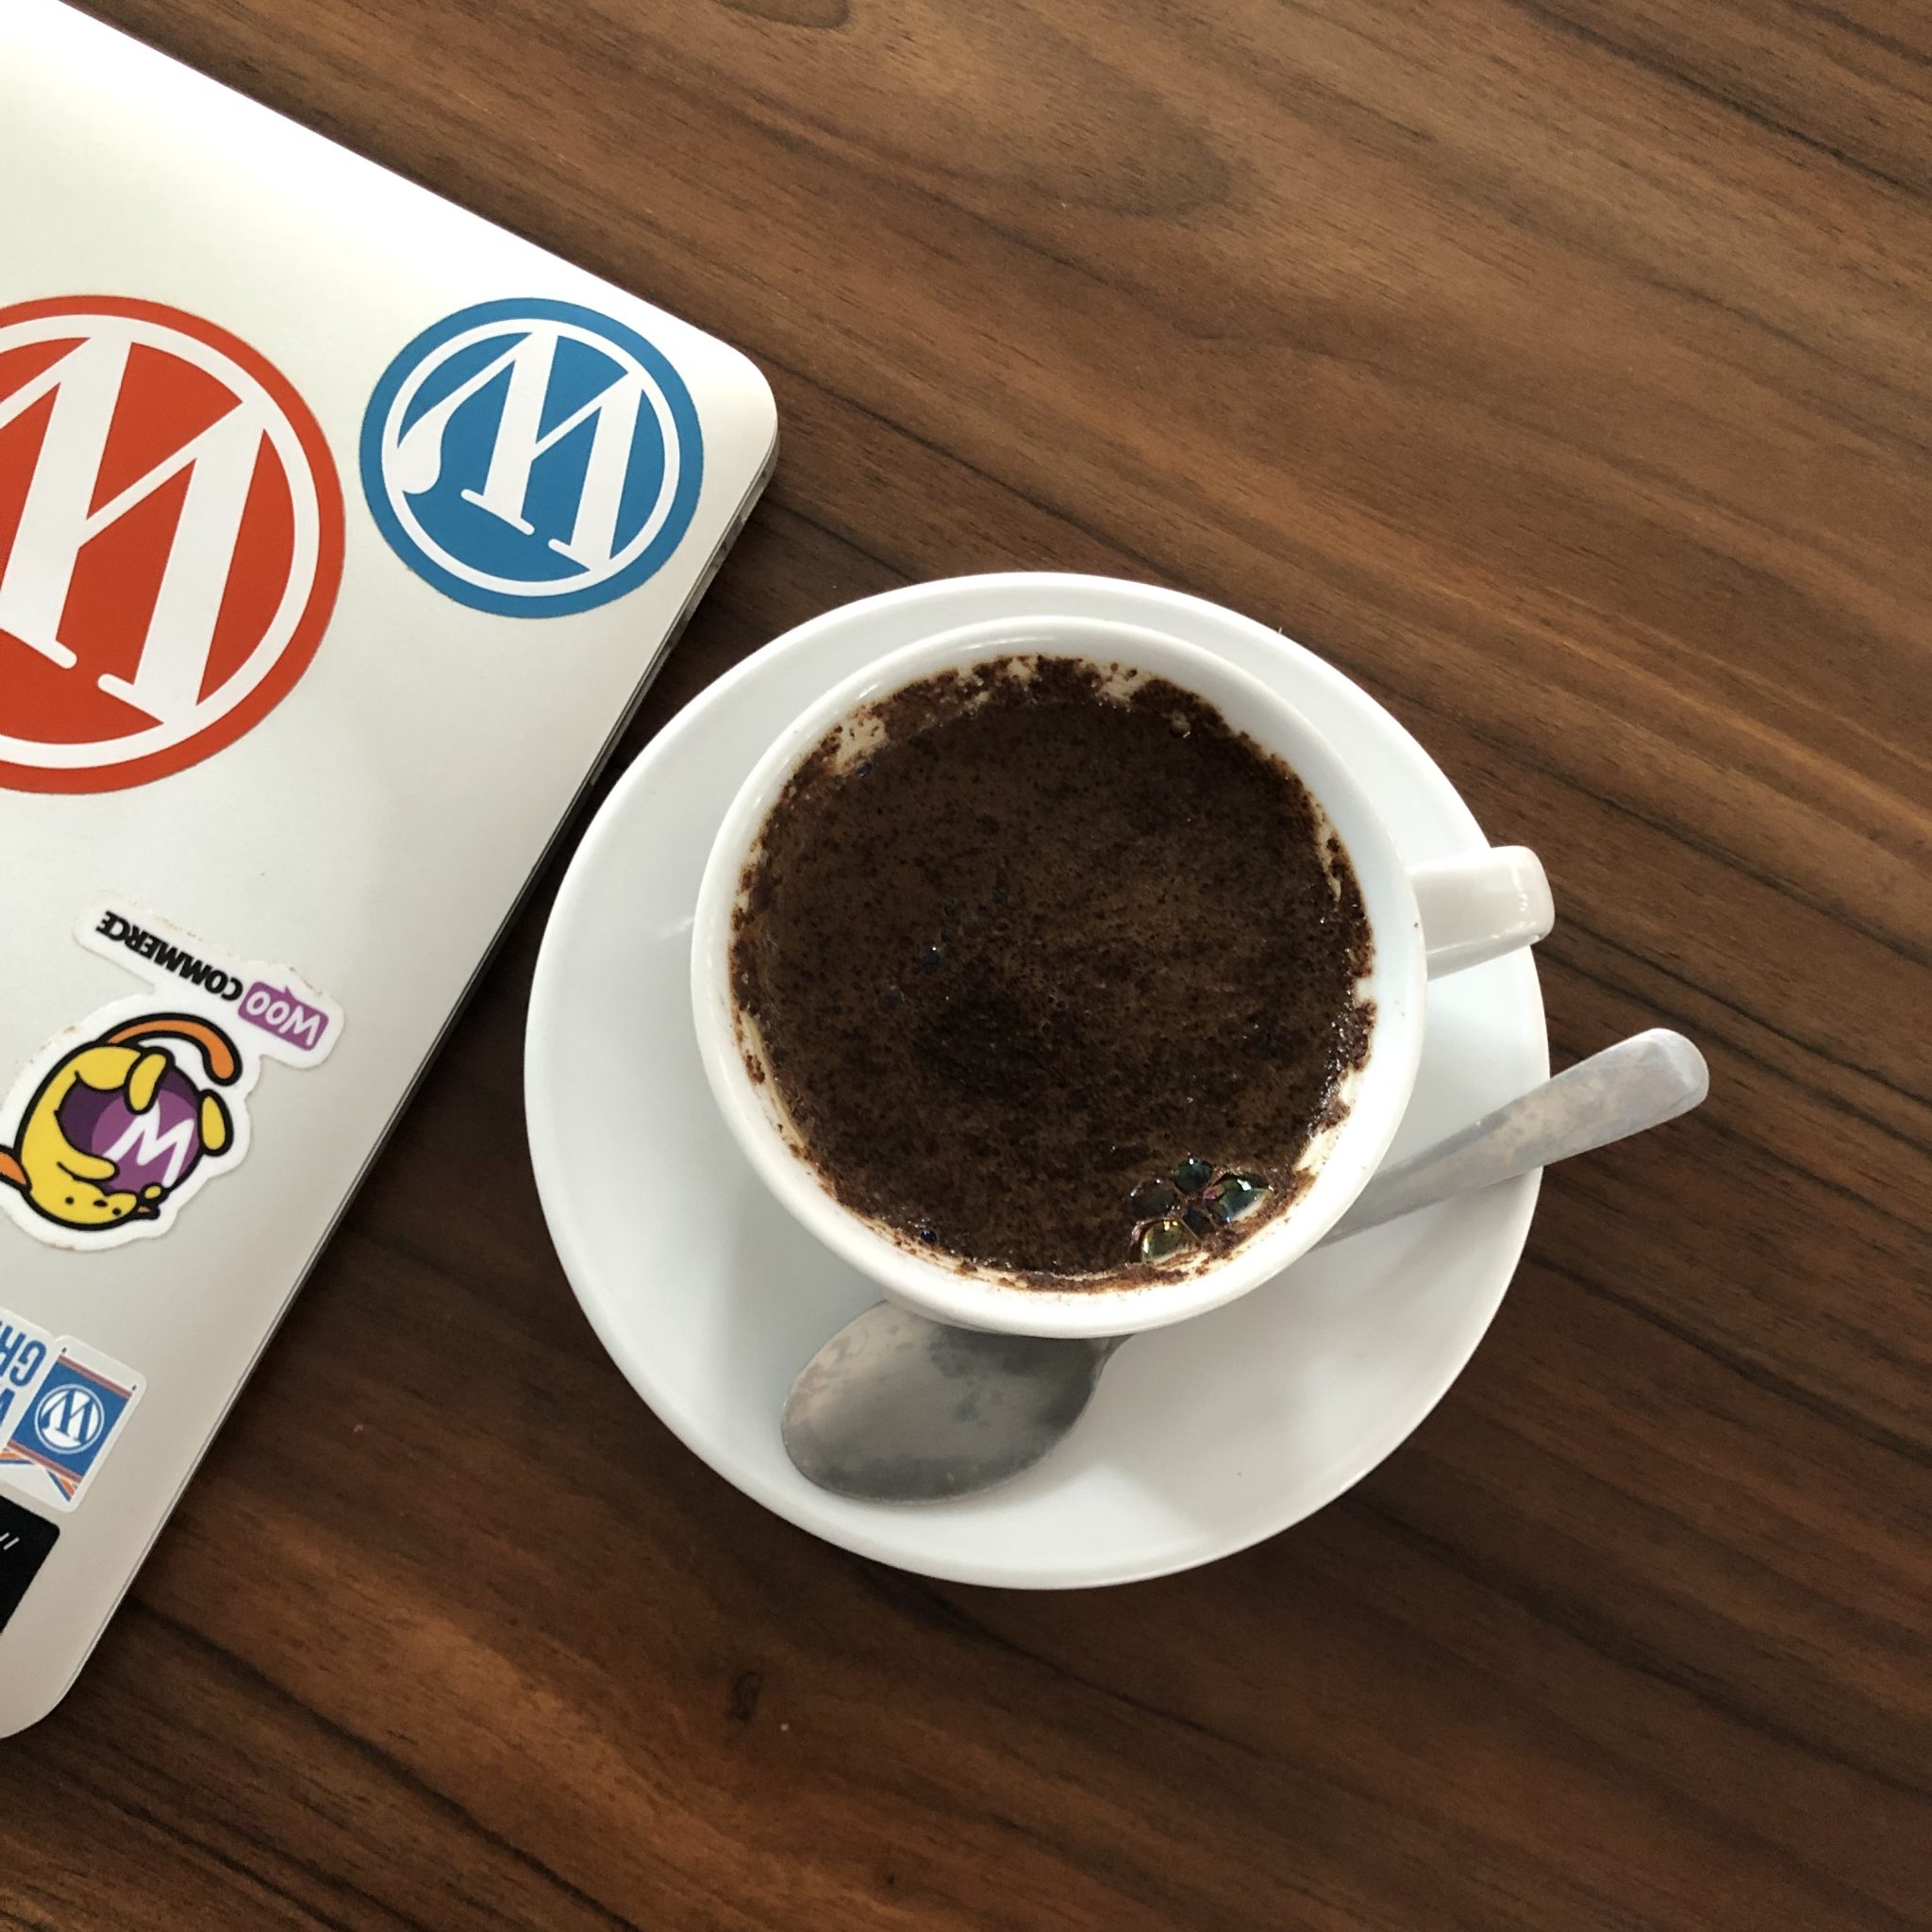 Tubruk coffee and laptop